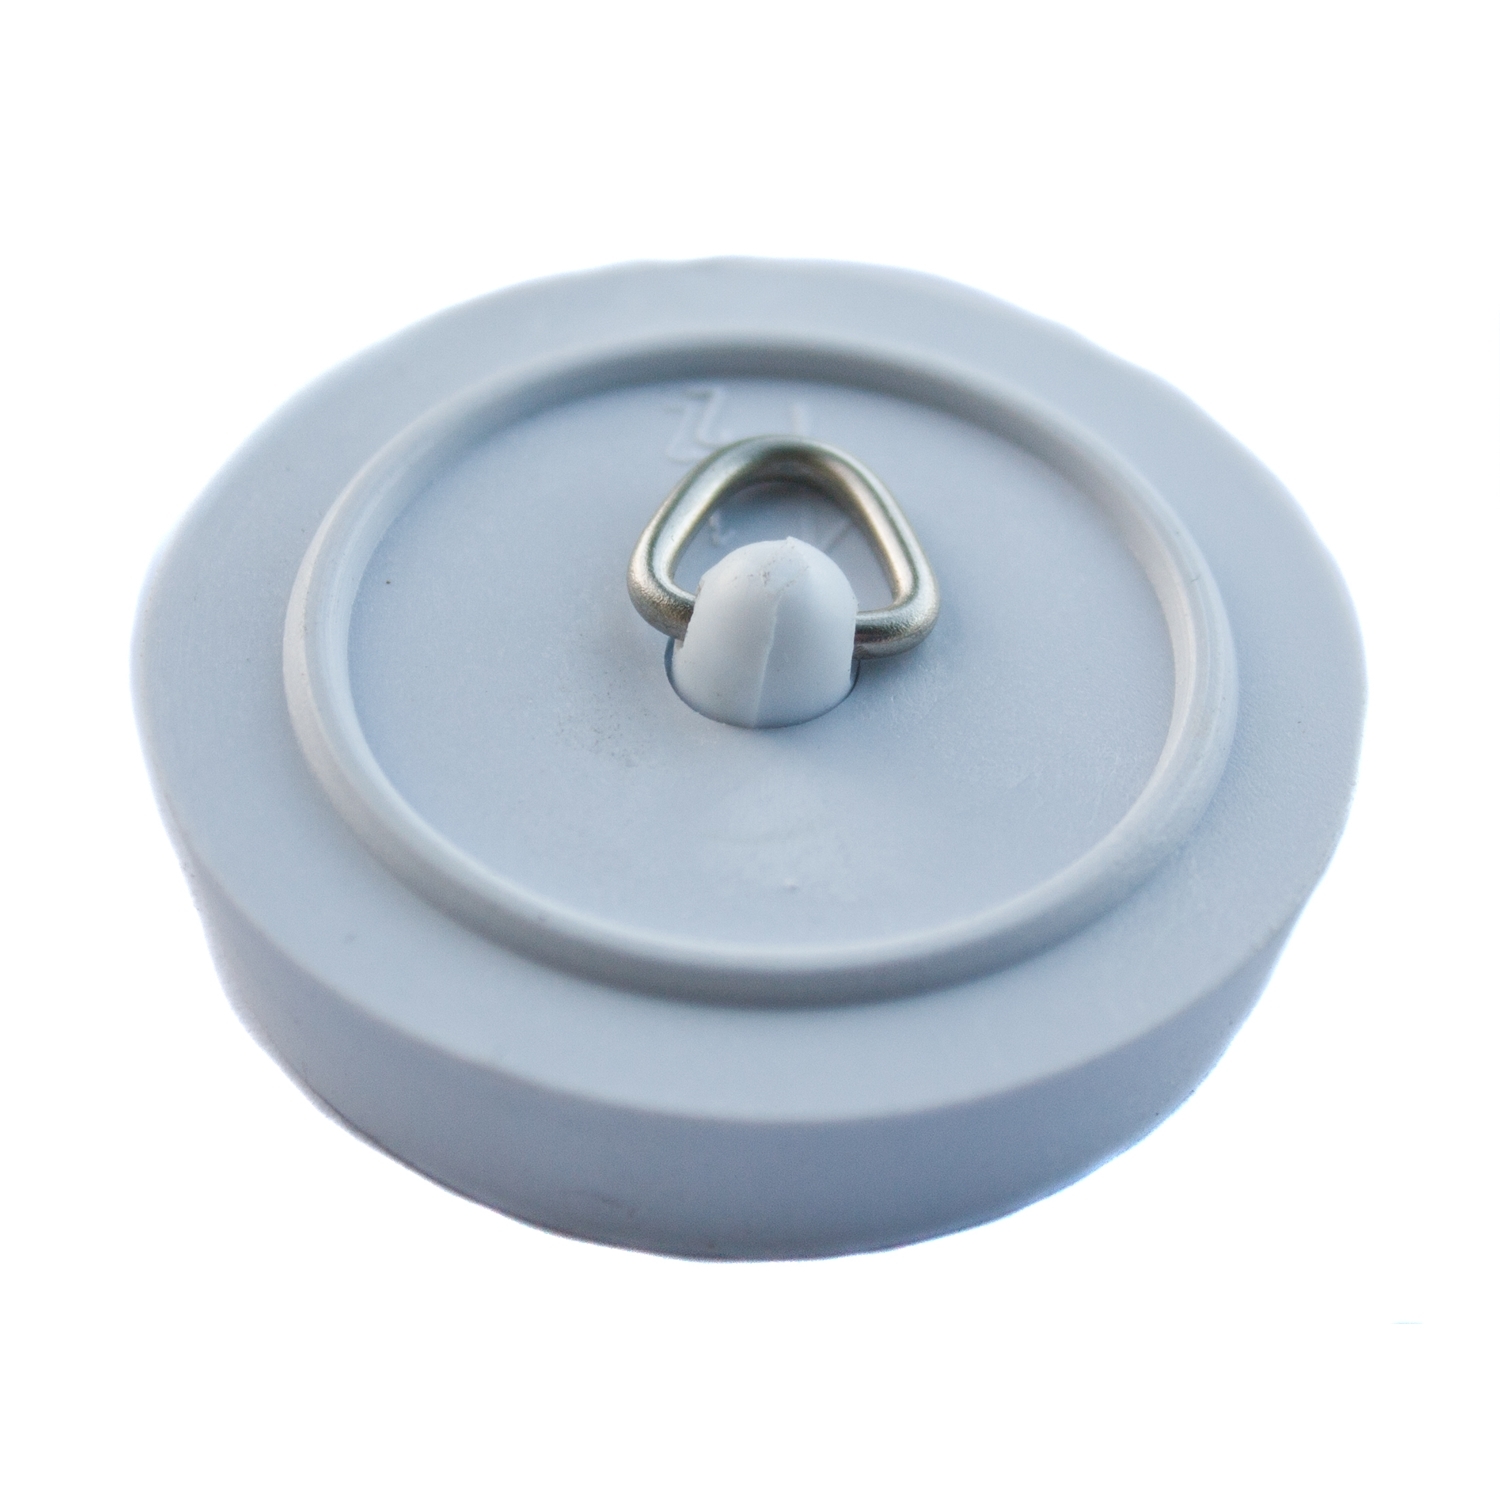 Oracstar Polythene Sink Plug - White / 38mm Image